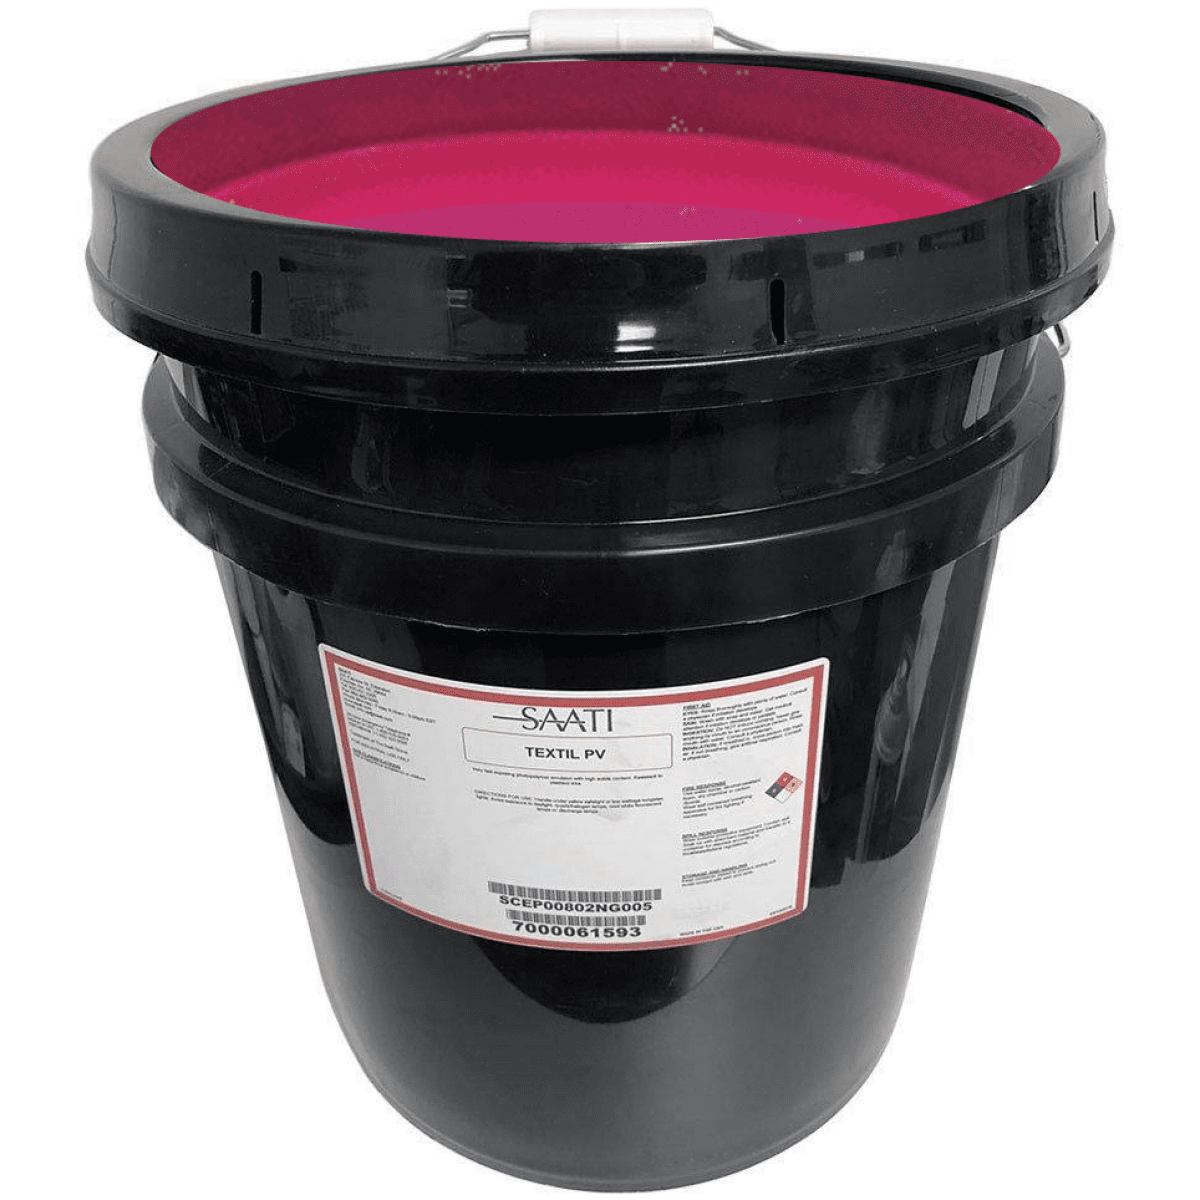 Saati PV Textile Emulsion (Pink Color) SAATI®